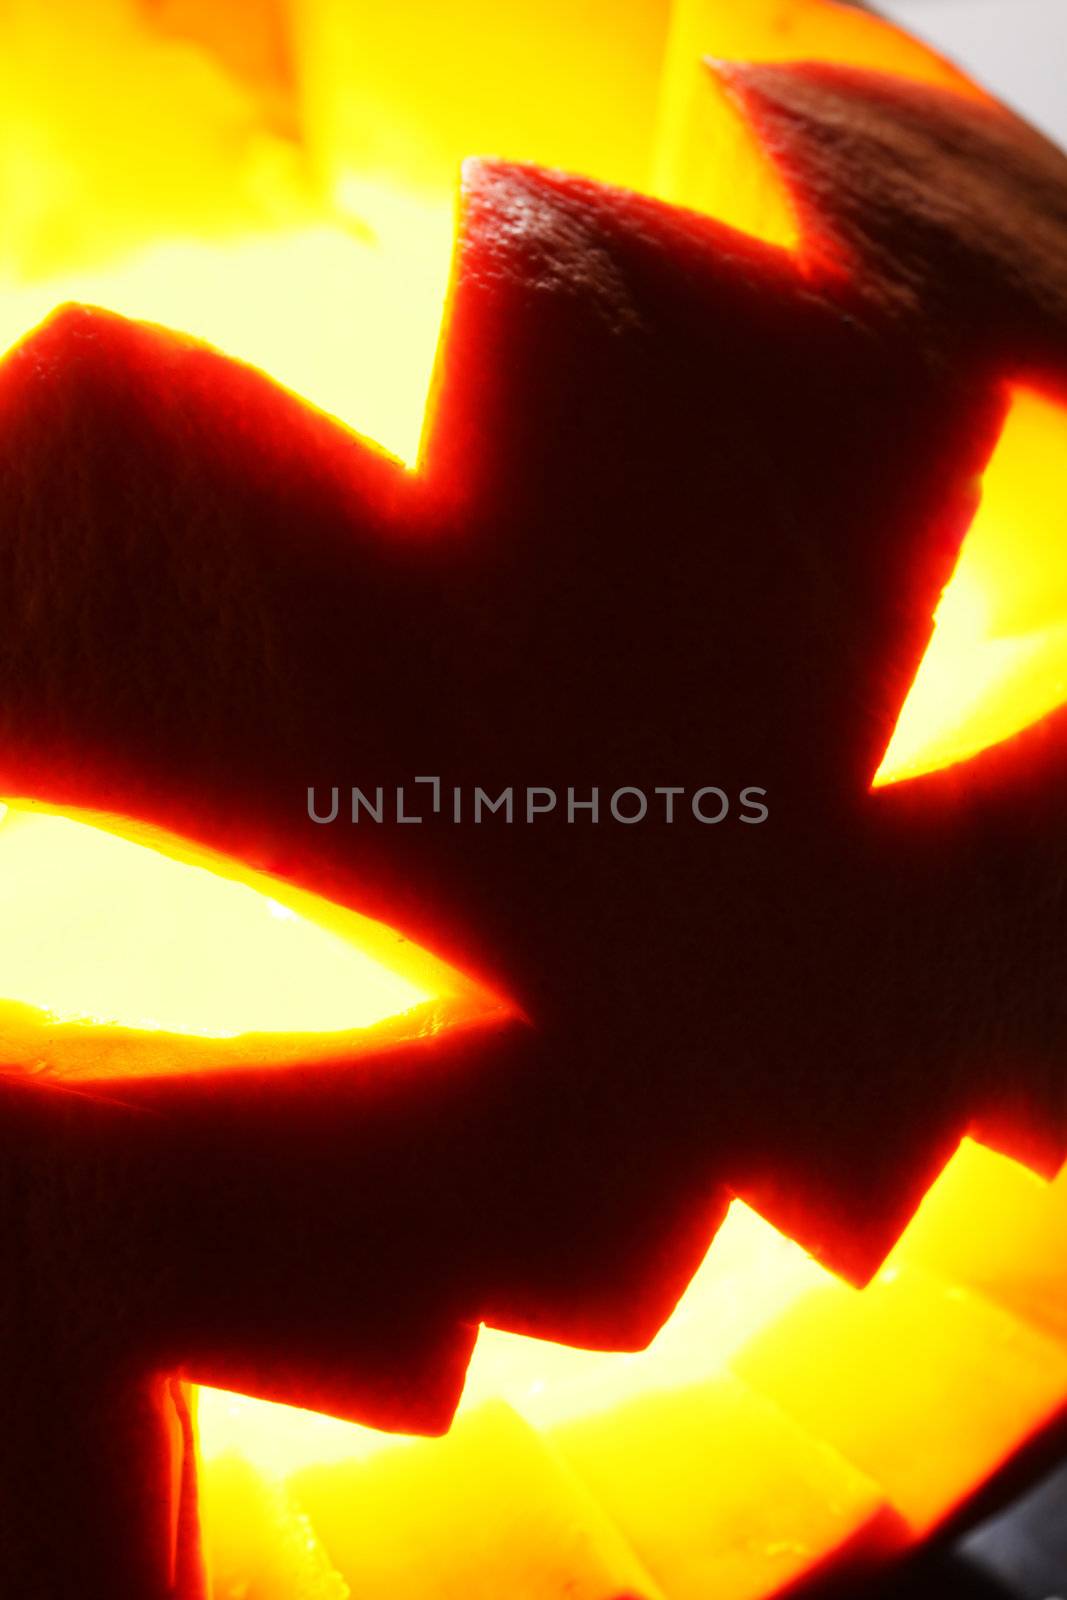 Illuminated halloween pumpkin by rufatjumali